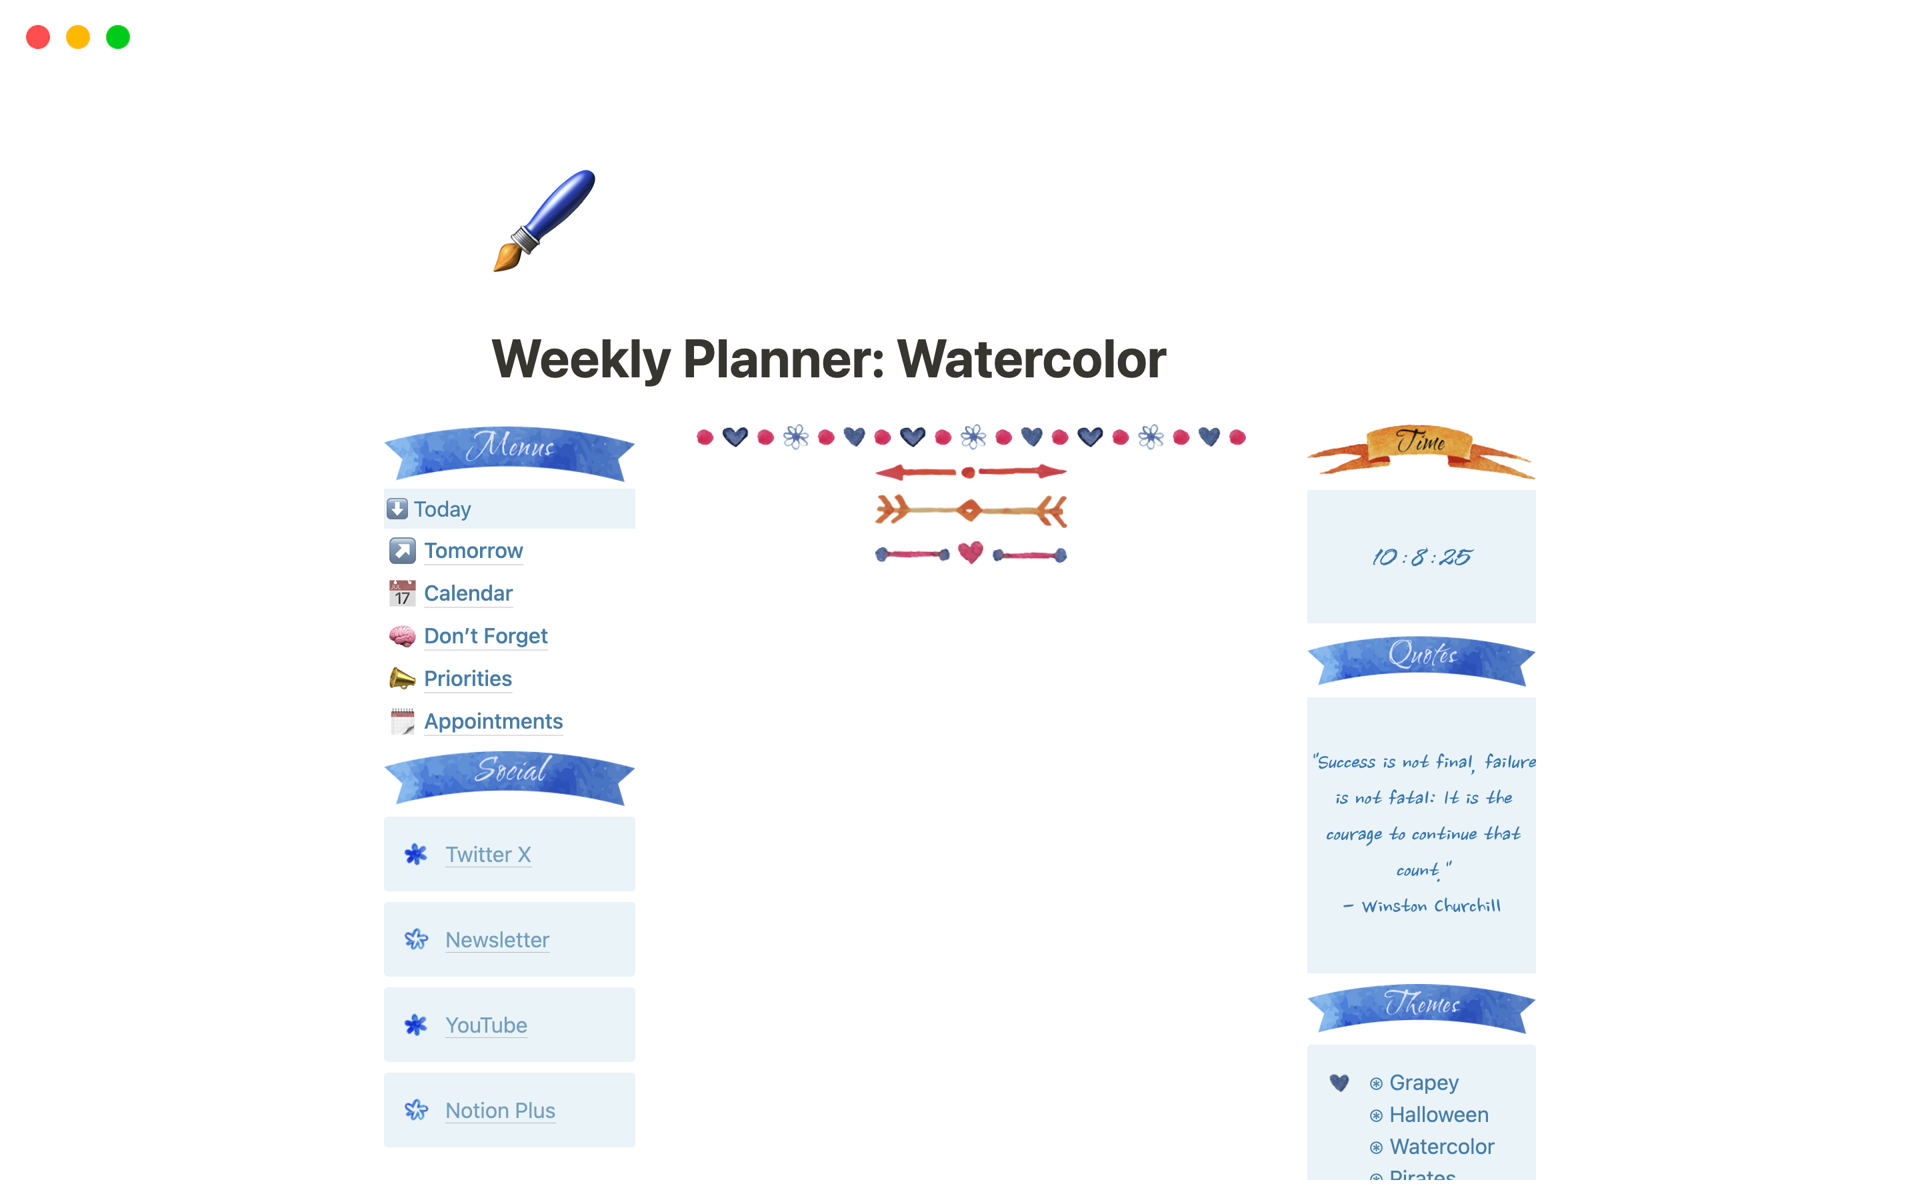 Aesthetic Weekly Planner: Watercolorのテンプレートのプレビュー